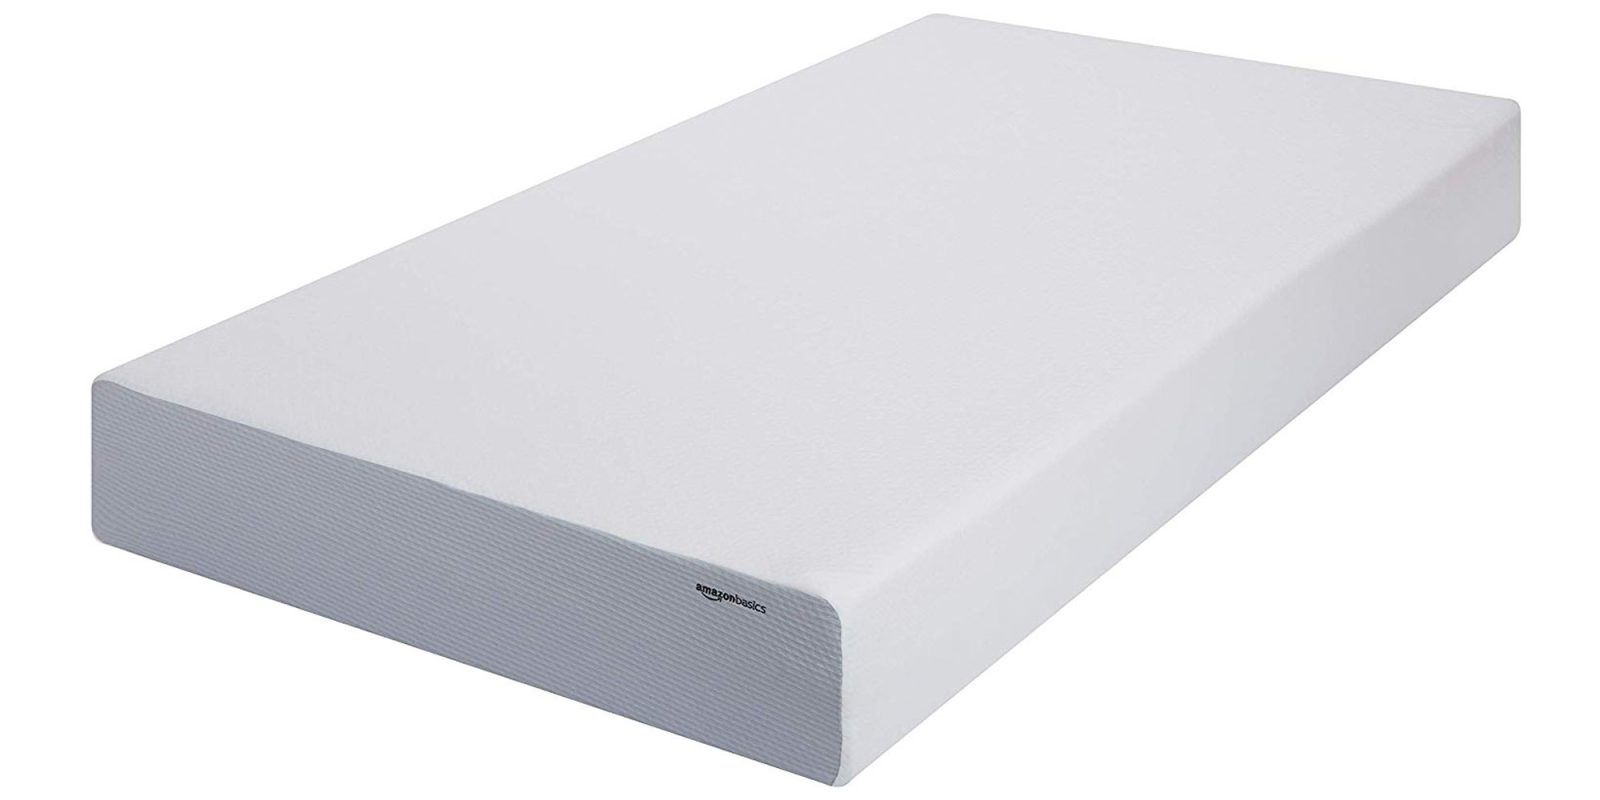 bestchoice memory foam mattress amazon